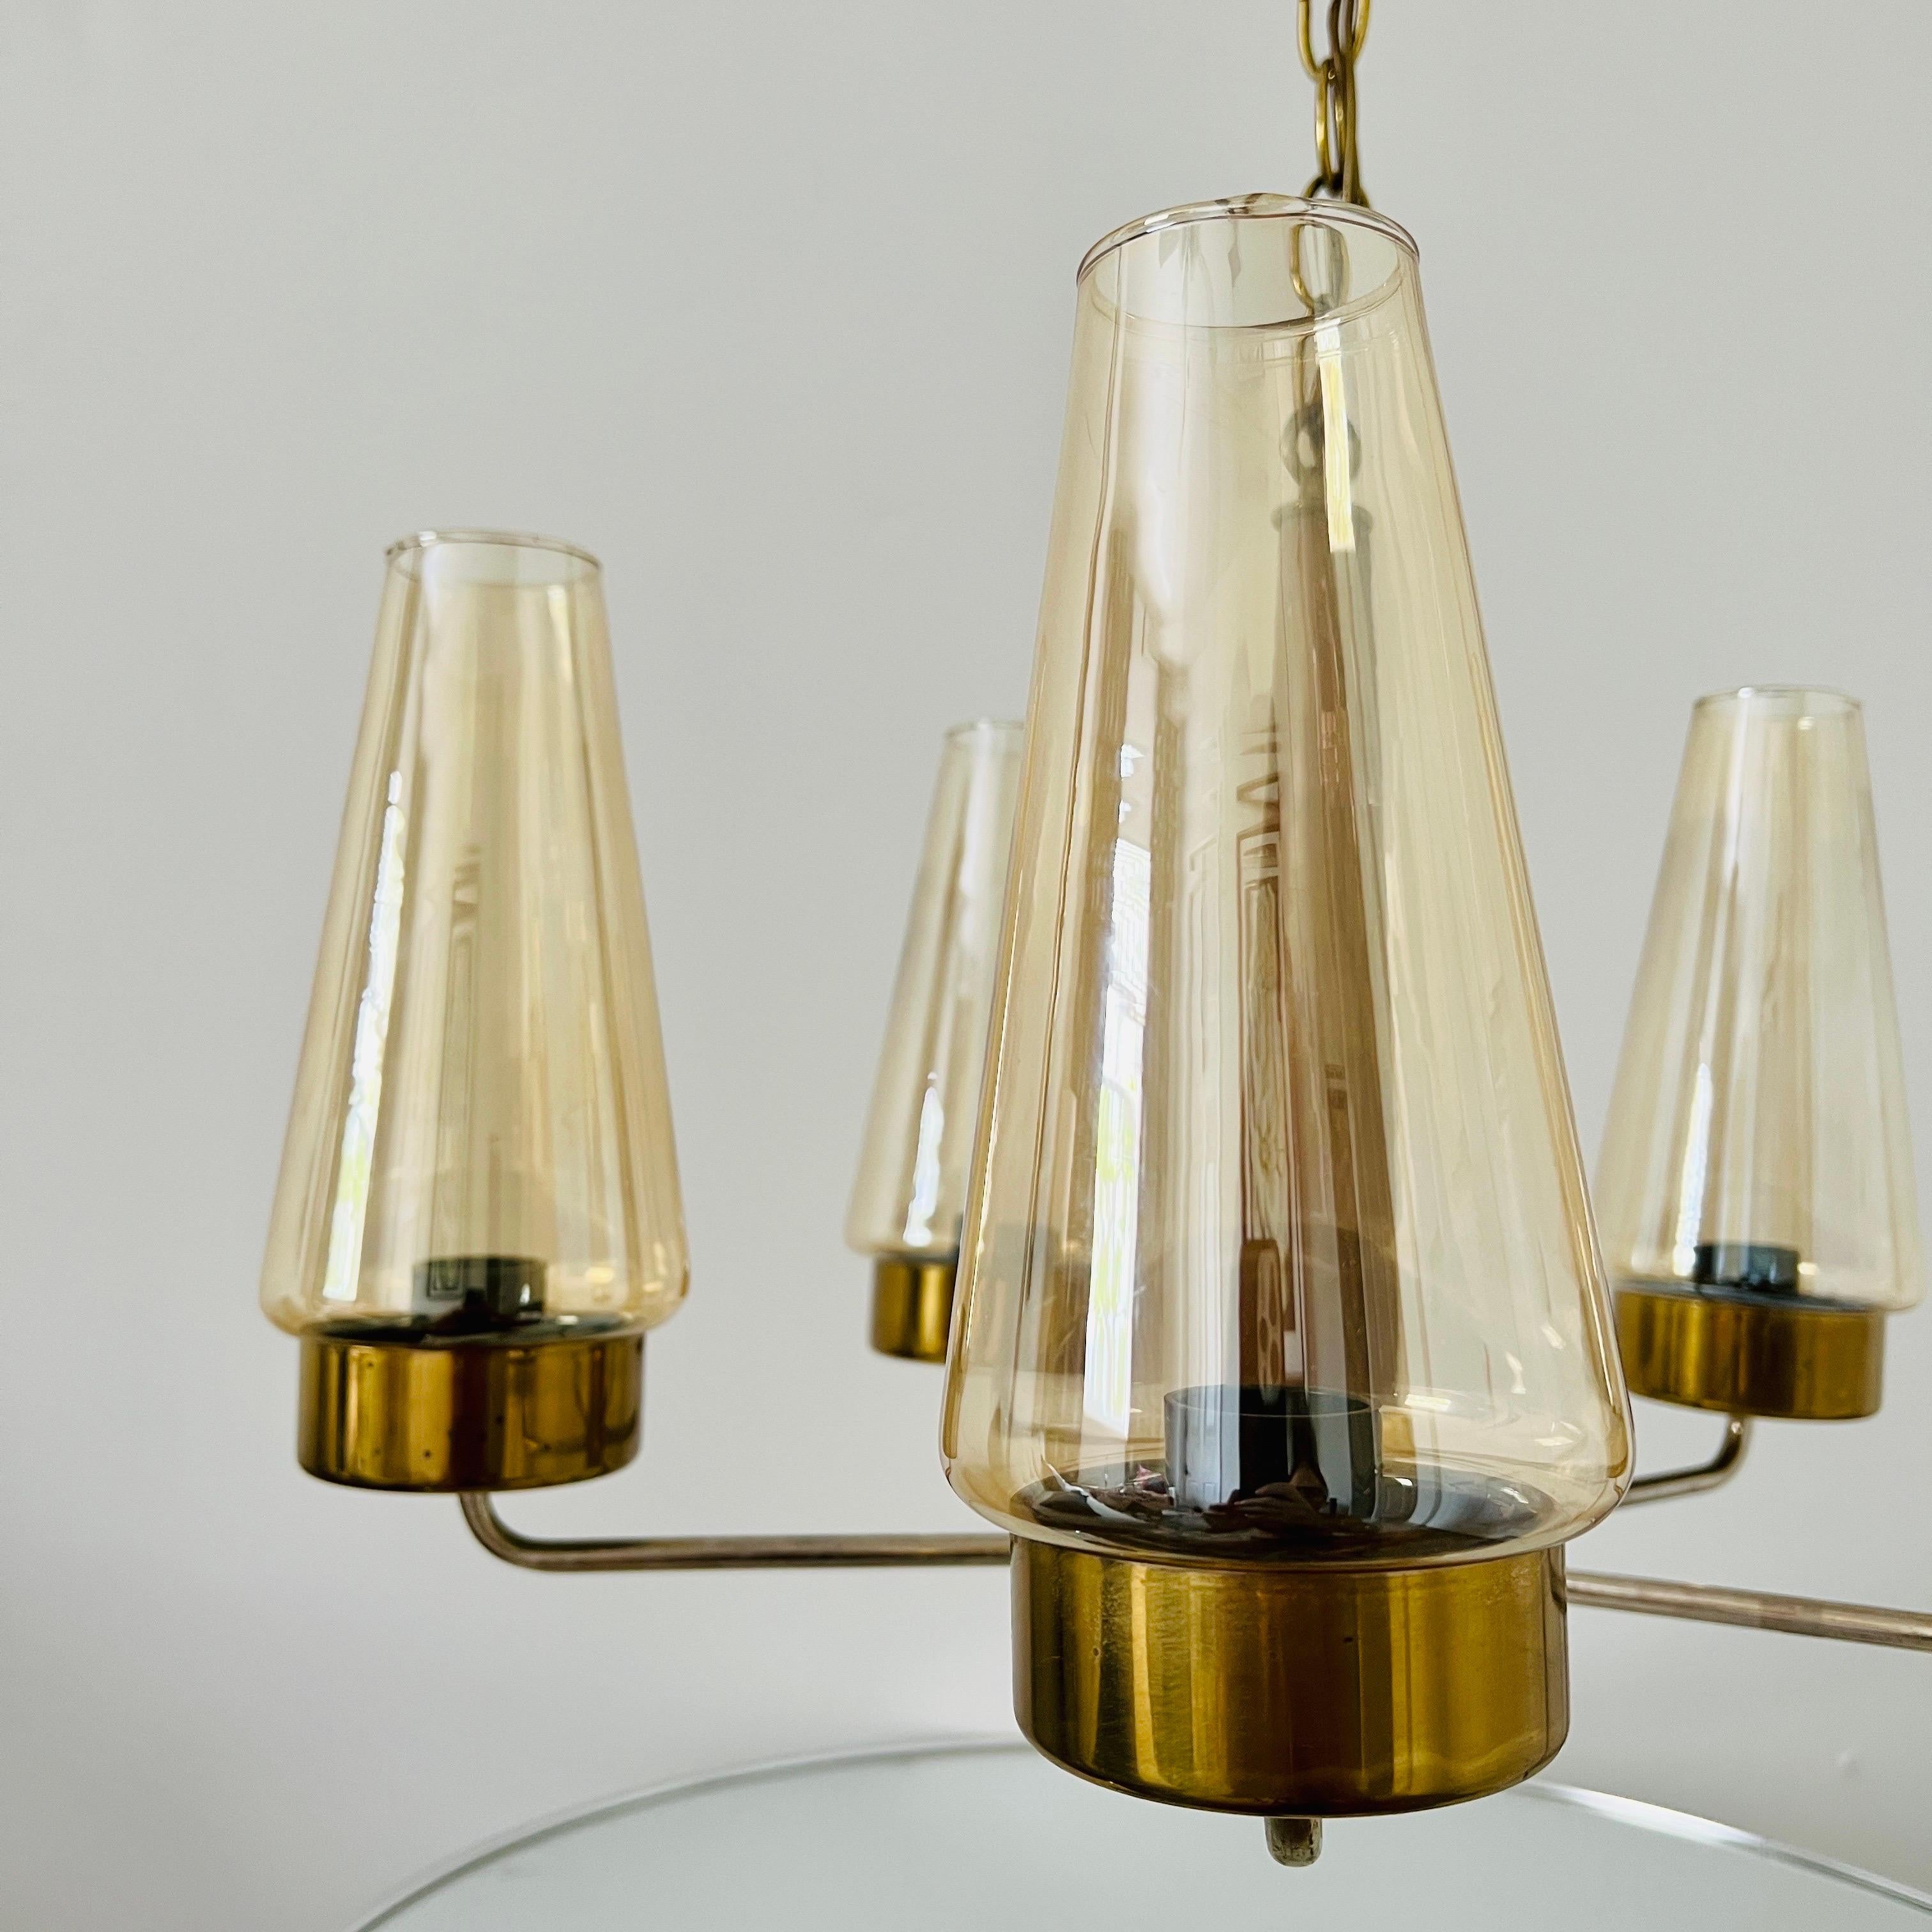 Danish Mid-Century Modern Sputnik Chandelier in Teak, Brass, and Blown Glass, c. 1950's For Sale